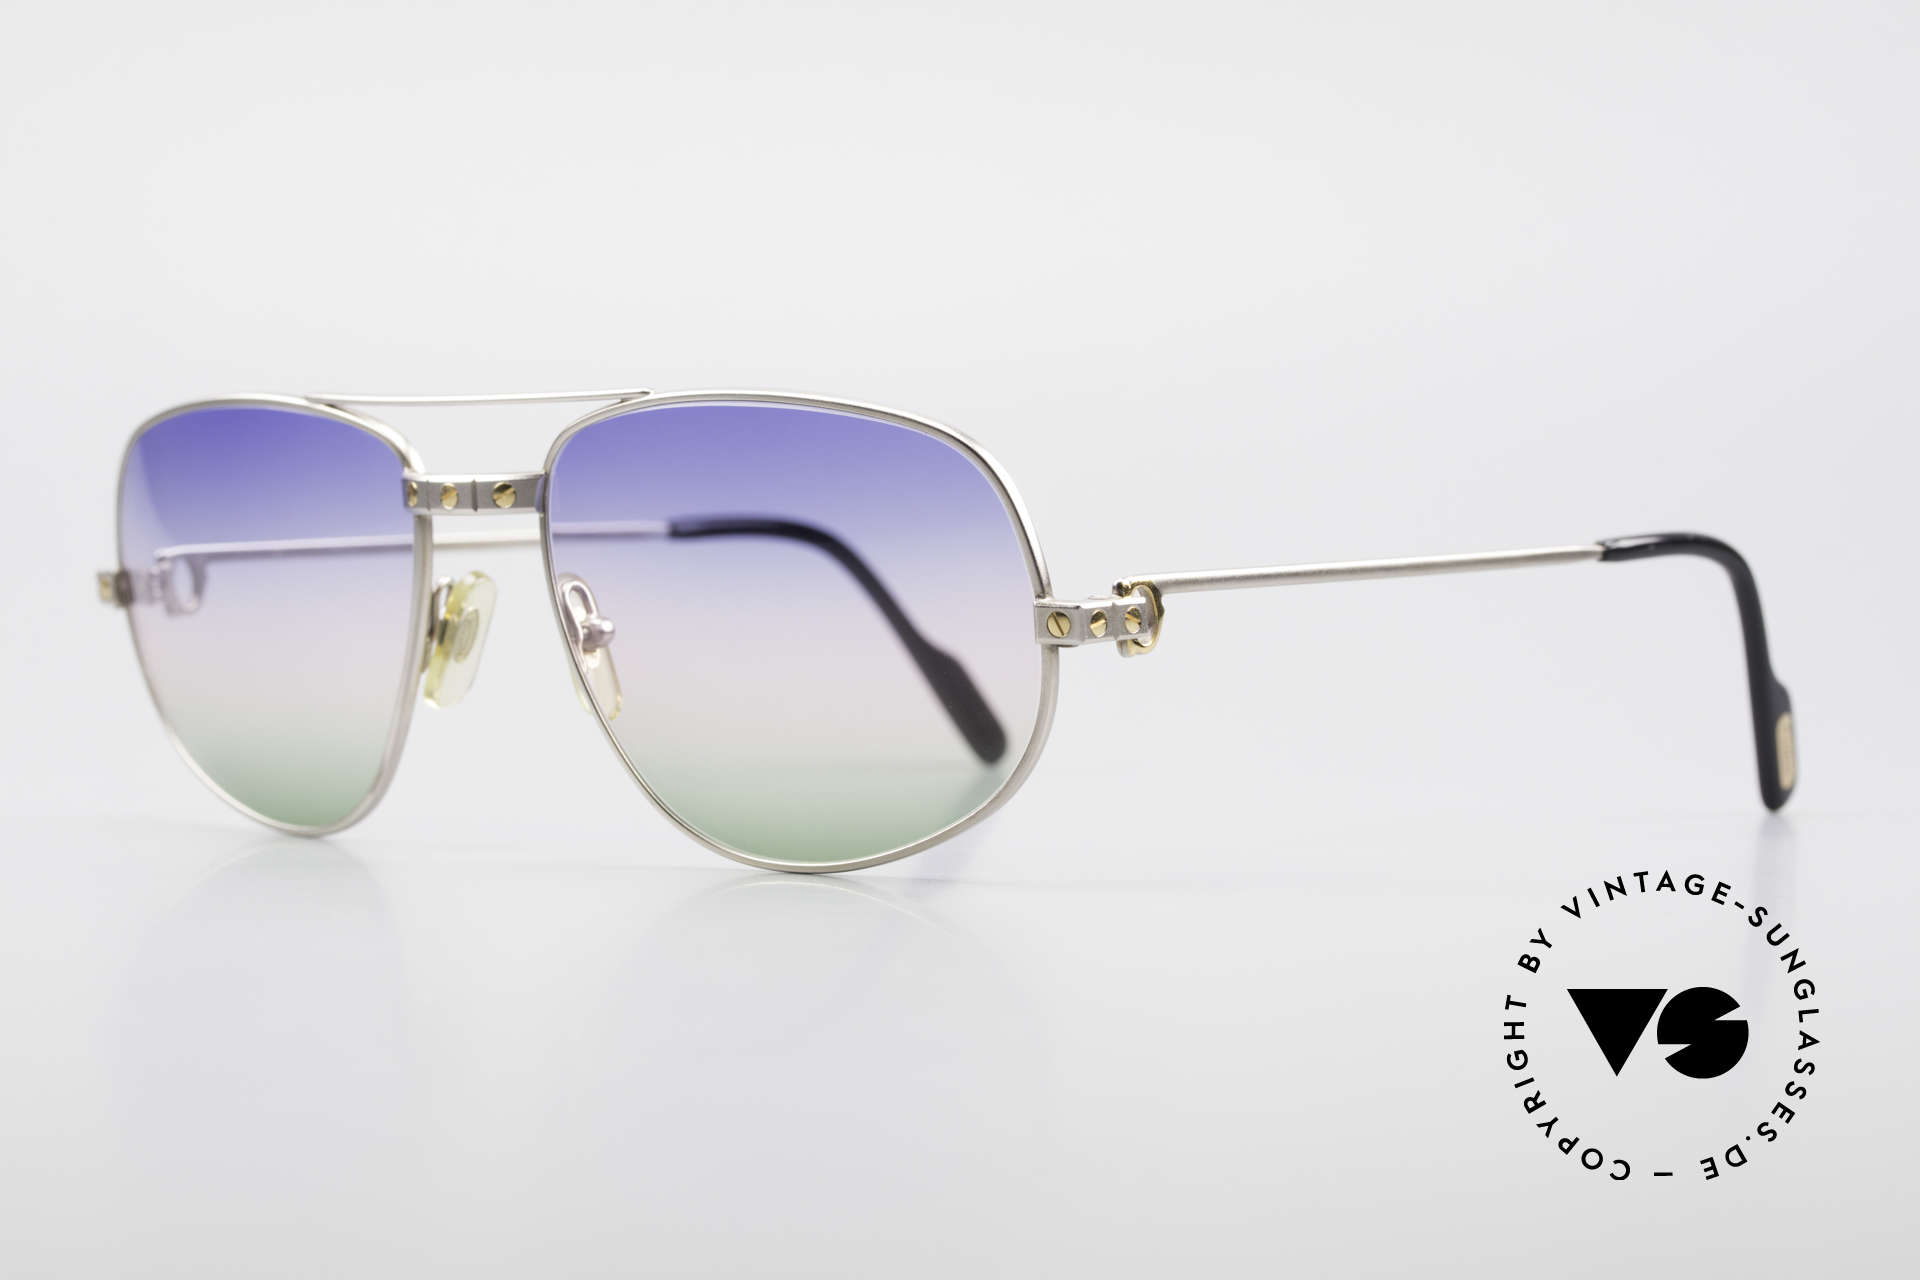 cartier vintage sunglasses price